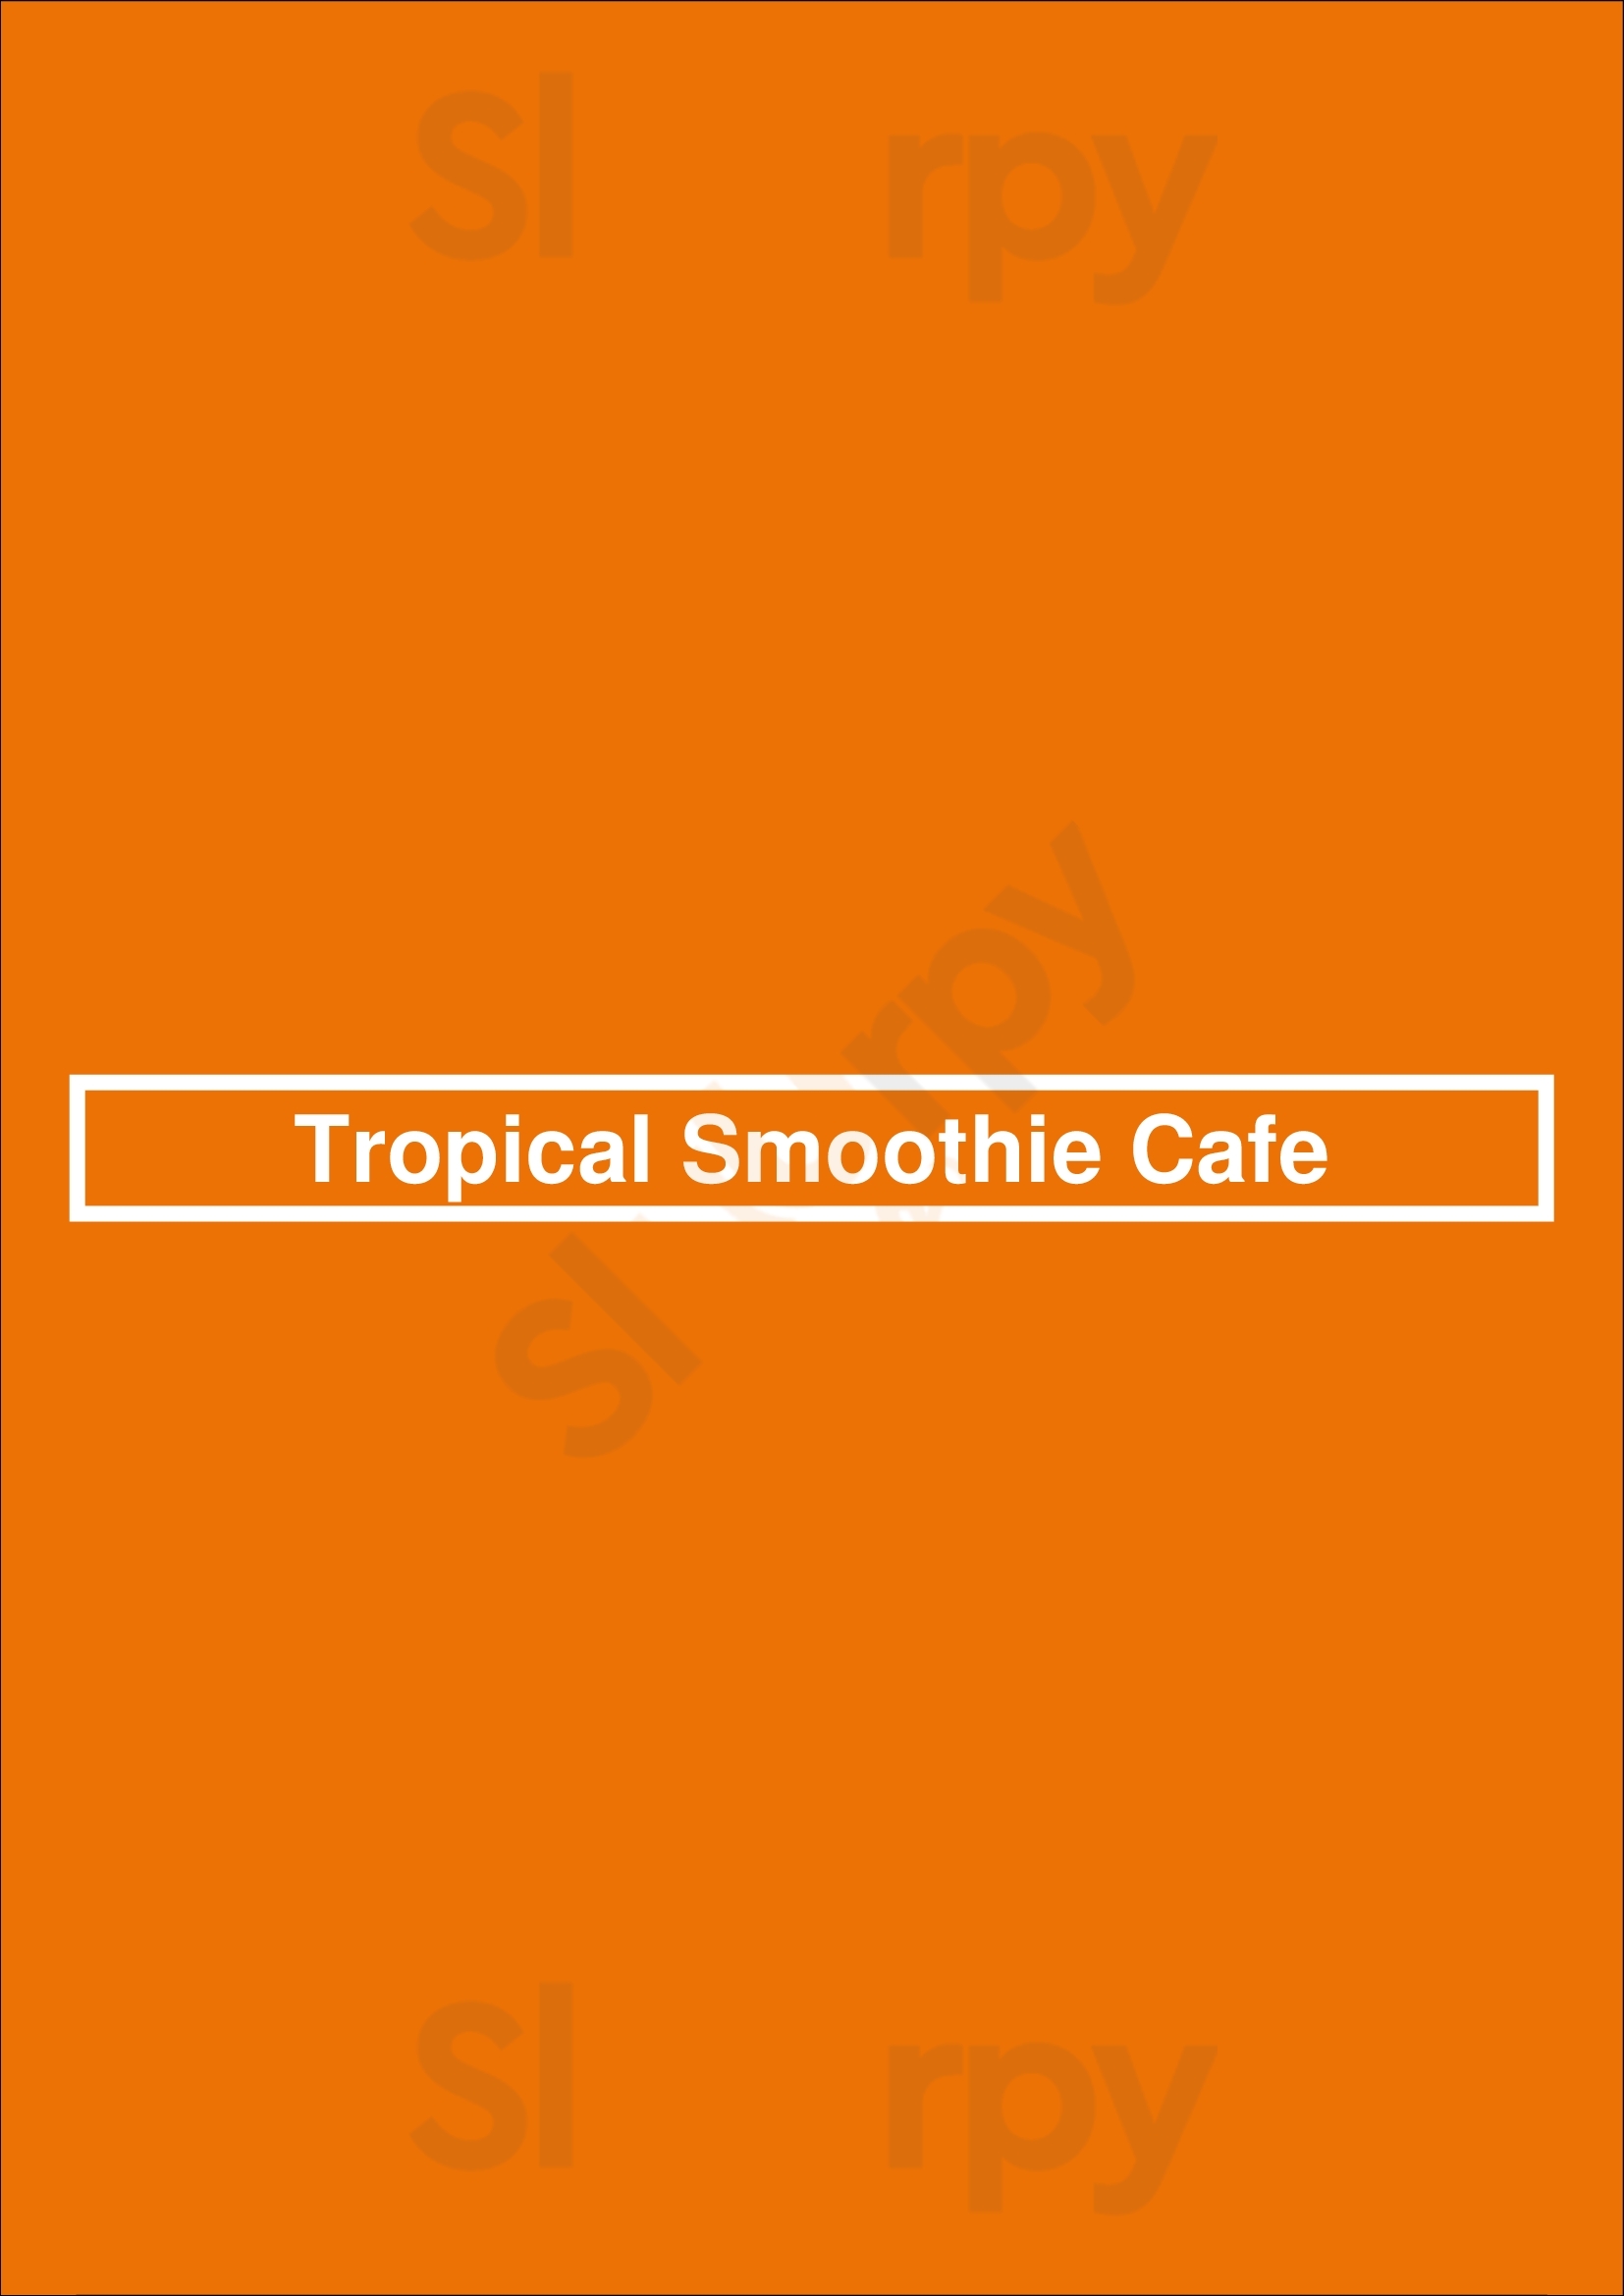 Tropical Smoothie Cafe Fort Worth Menu - 1